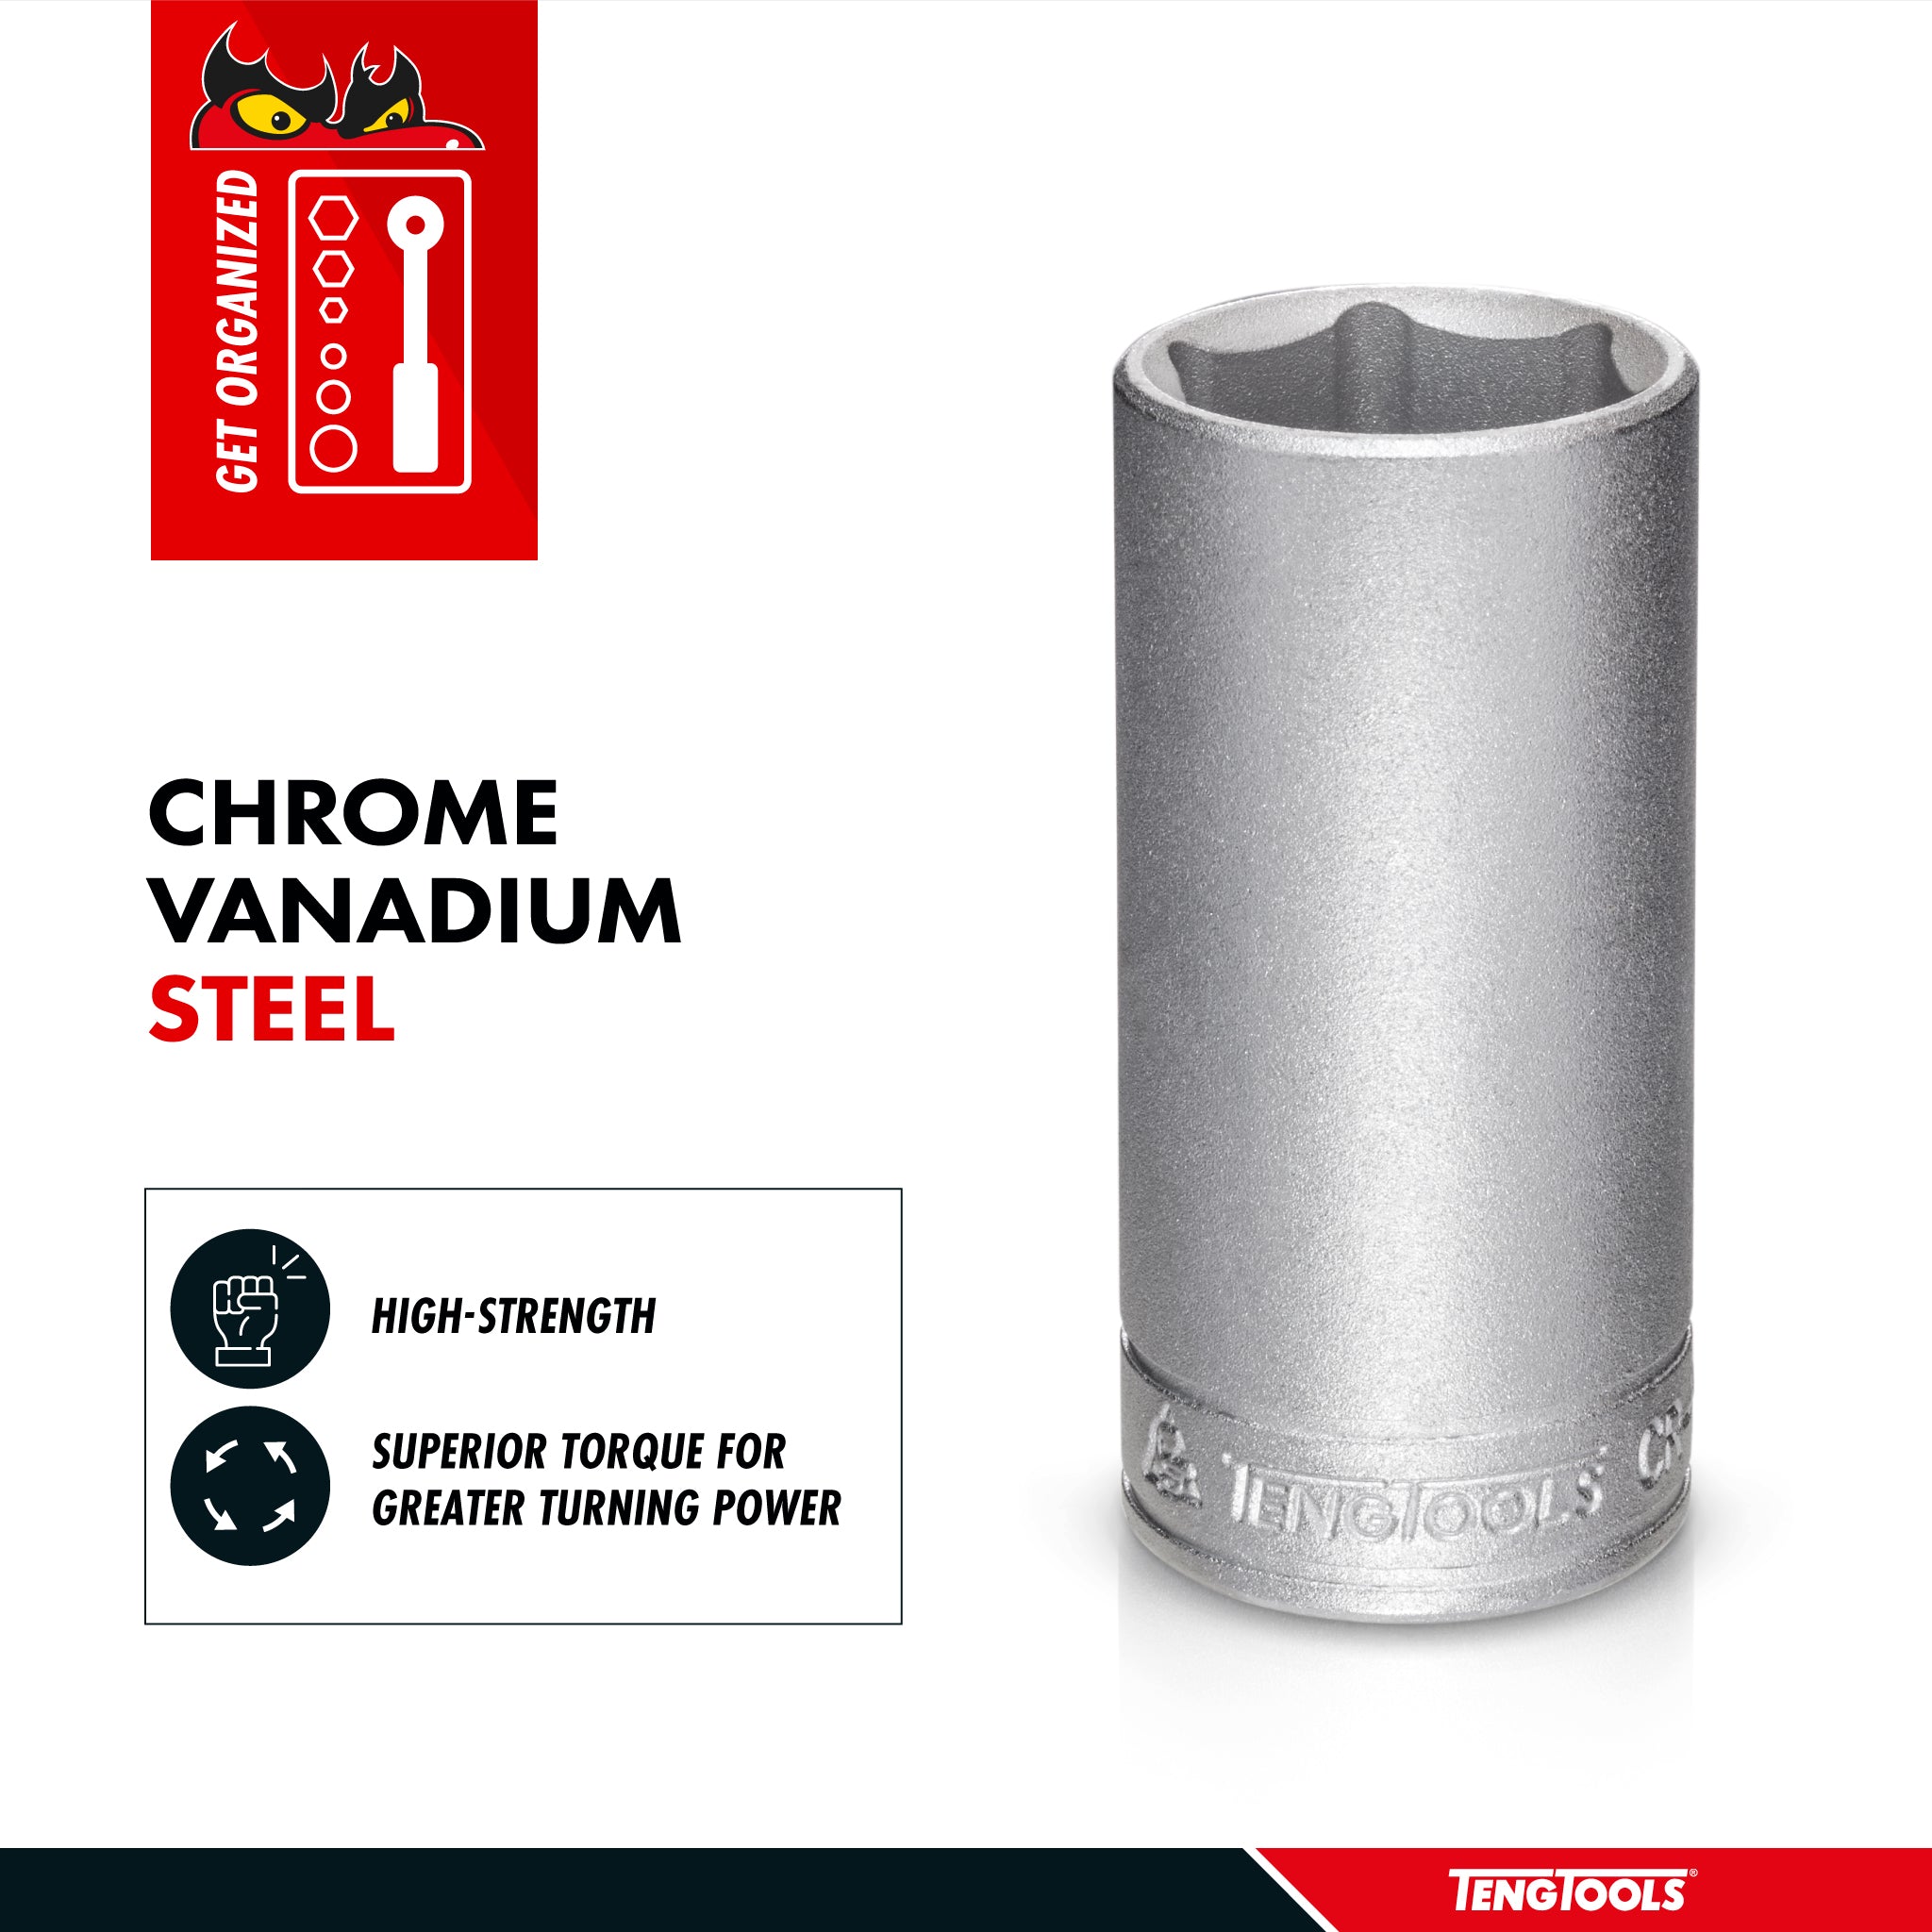 Teng Tools 6 Point SAE Deep 1/4 Inch Drive Chrome Vanadium Sockets - 3/8